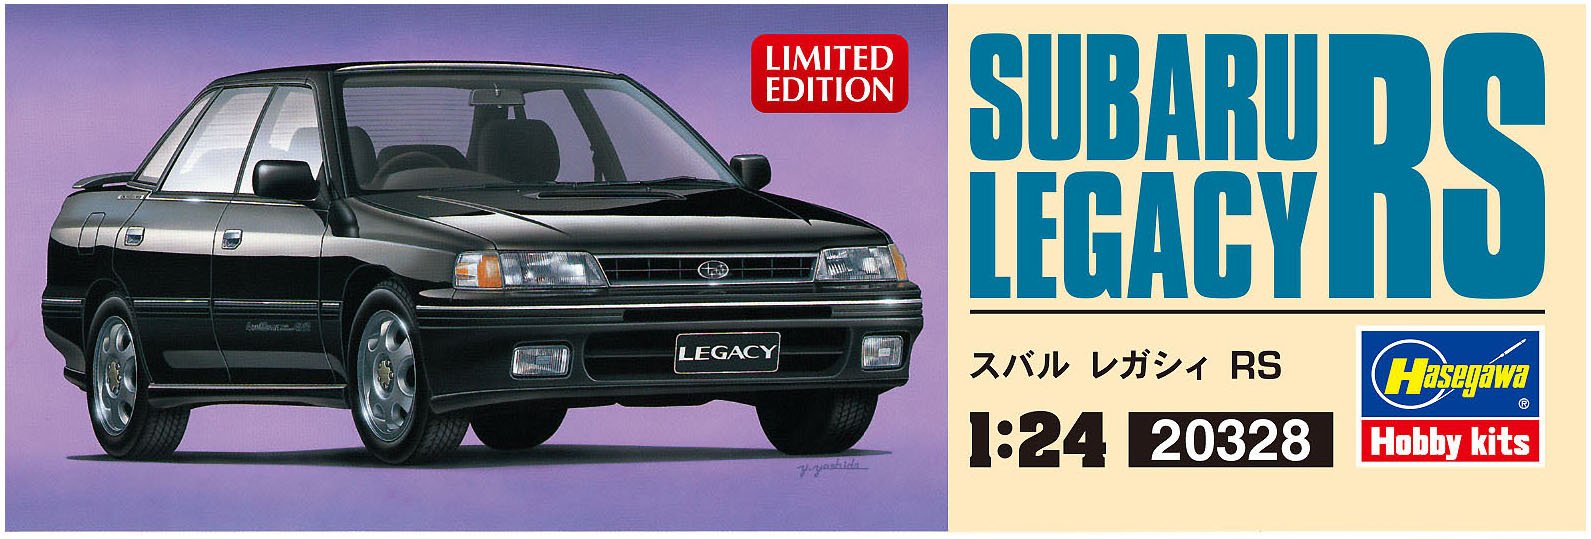 HASEGAWA 20328 Kit d'échelle Subaru Legacy Rs 1/24